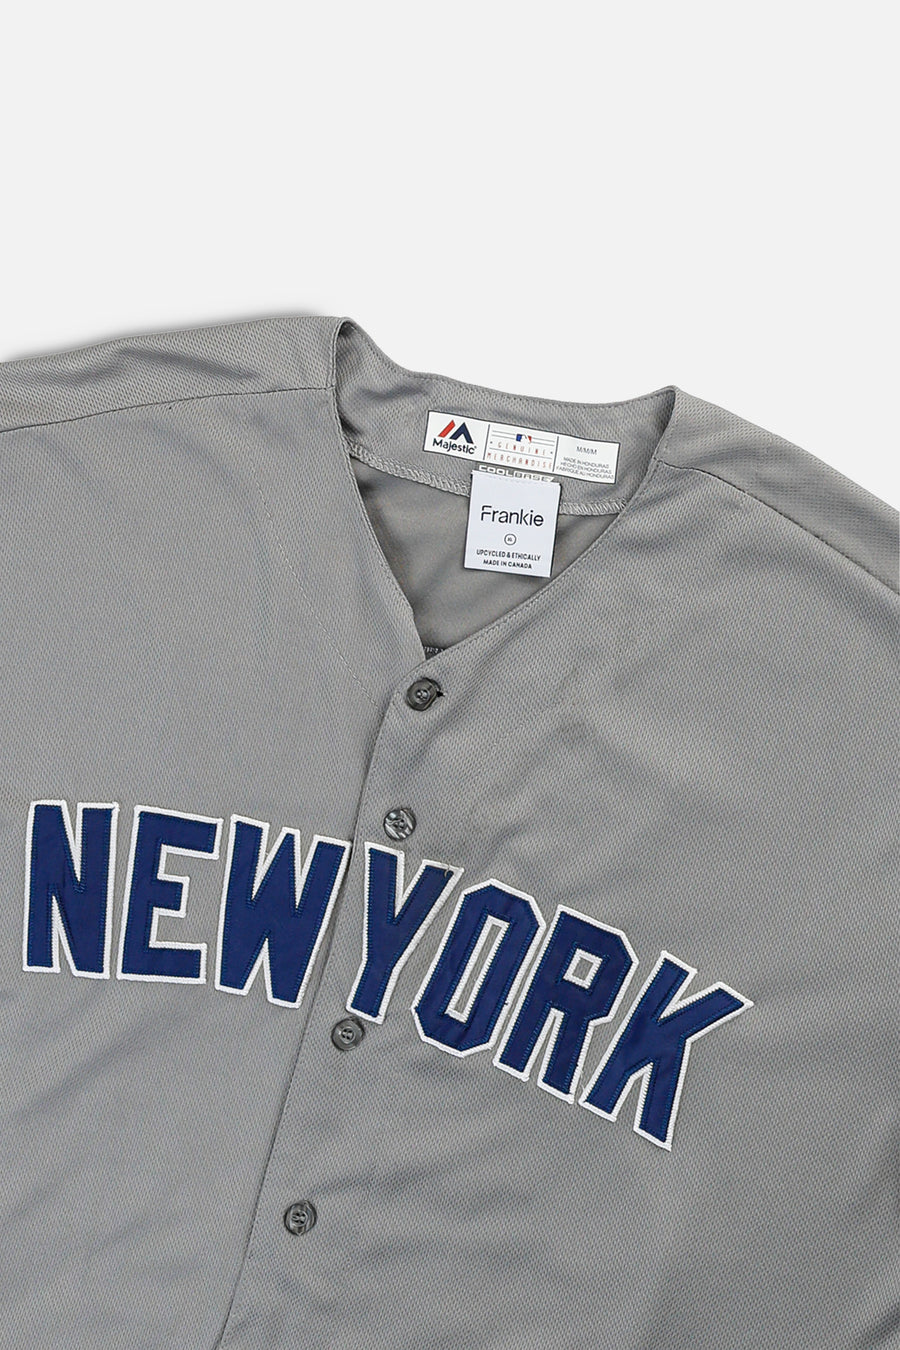 Rework Crop NY Yankees MLB Jersey - XL